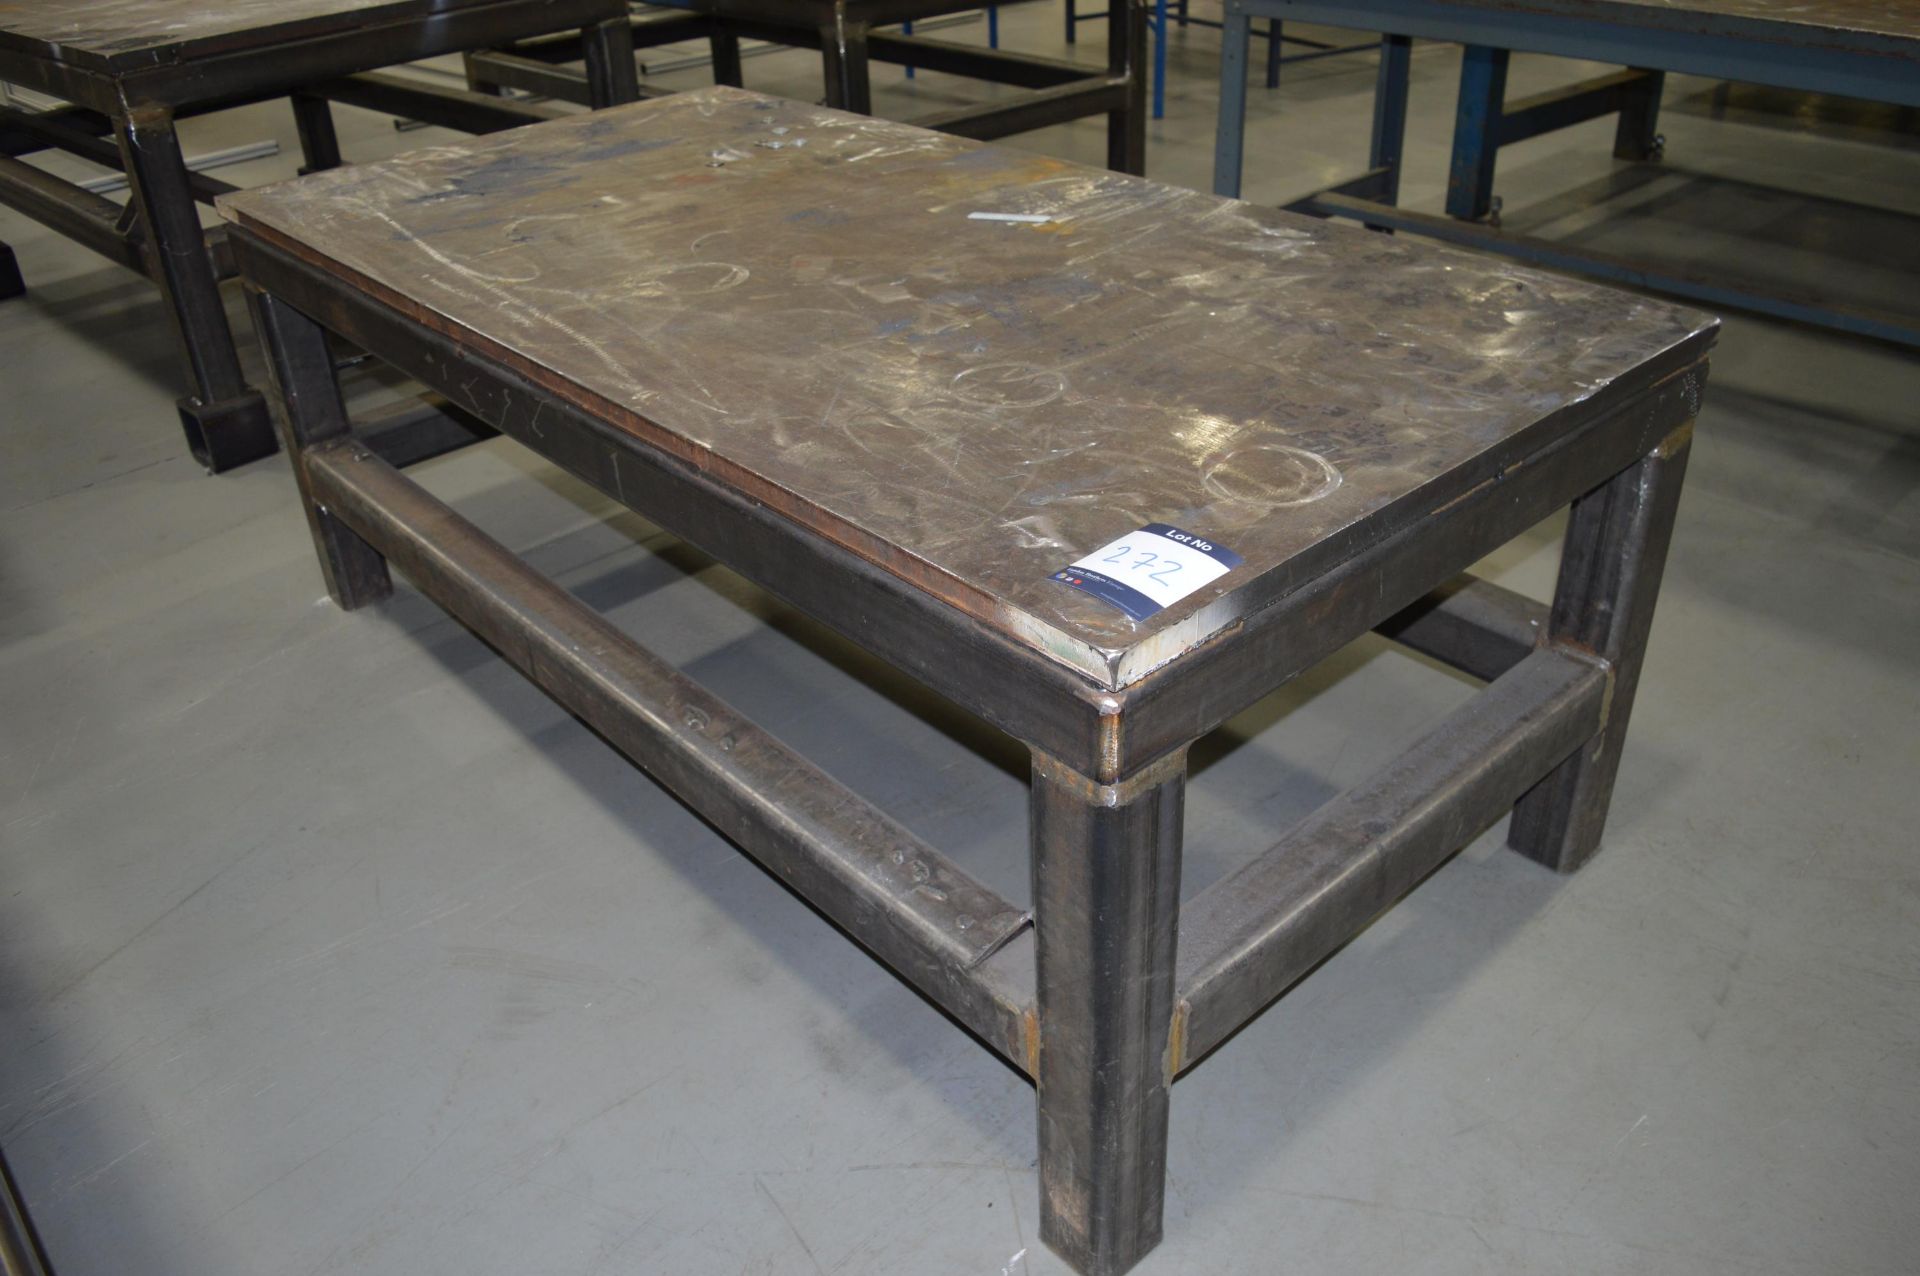 Steel Welding Bench
200cm(W) x 100cm(D) x 75cm(H)